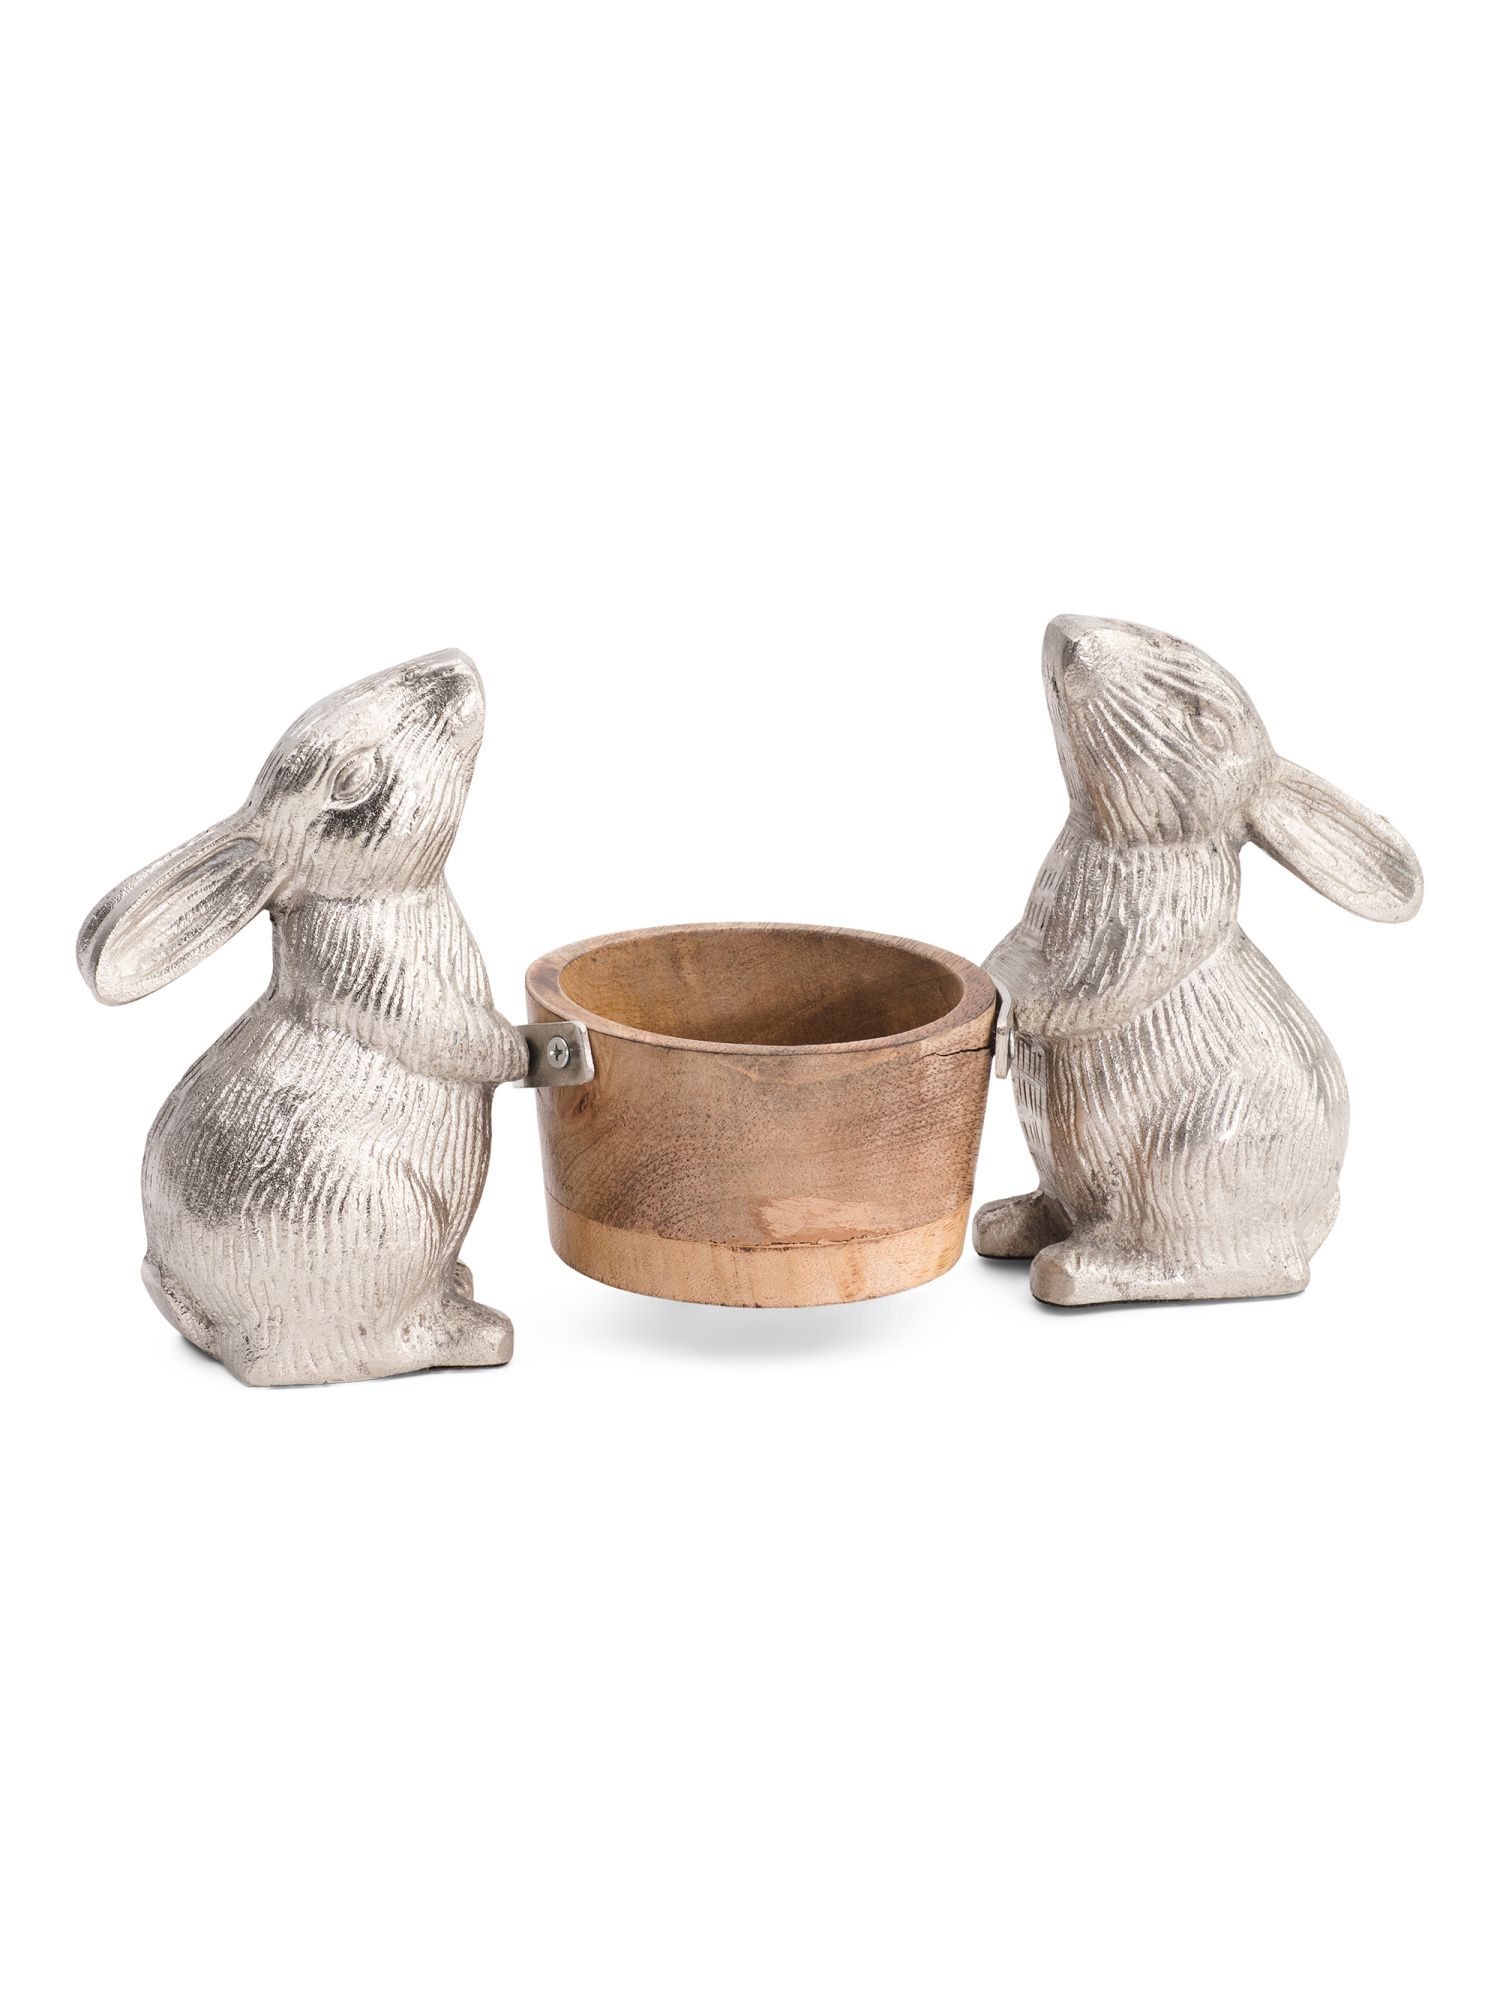 Raw Nickel Aluminum Rabbits With Wooden Bowl | TJ Maxx